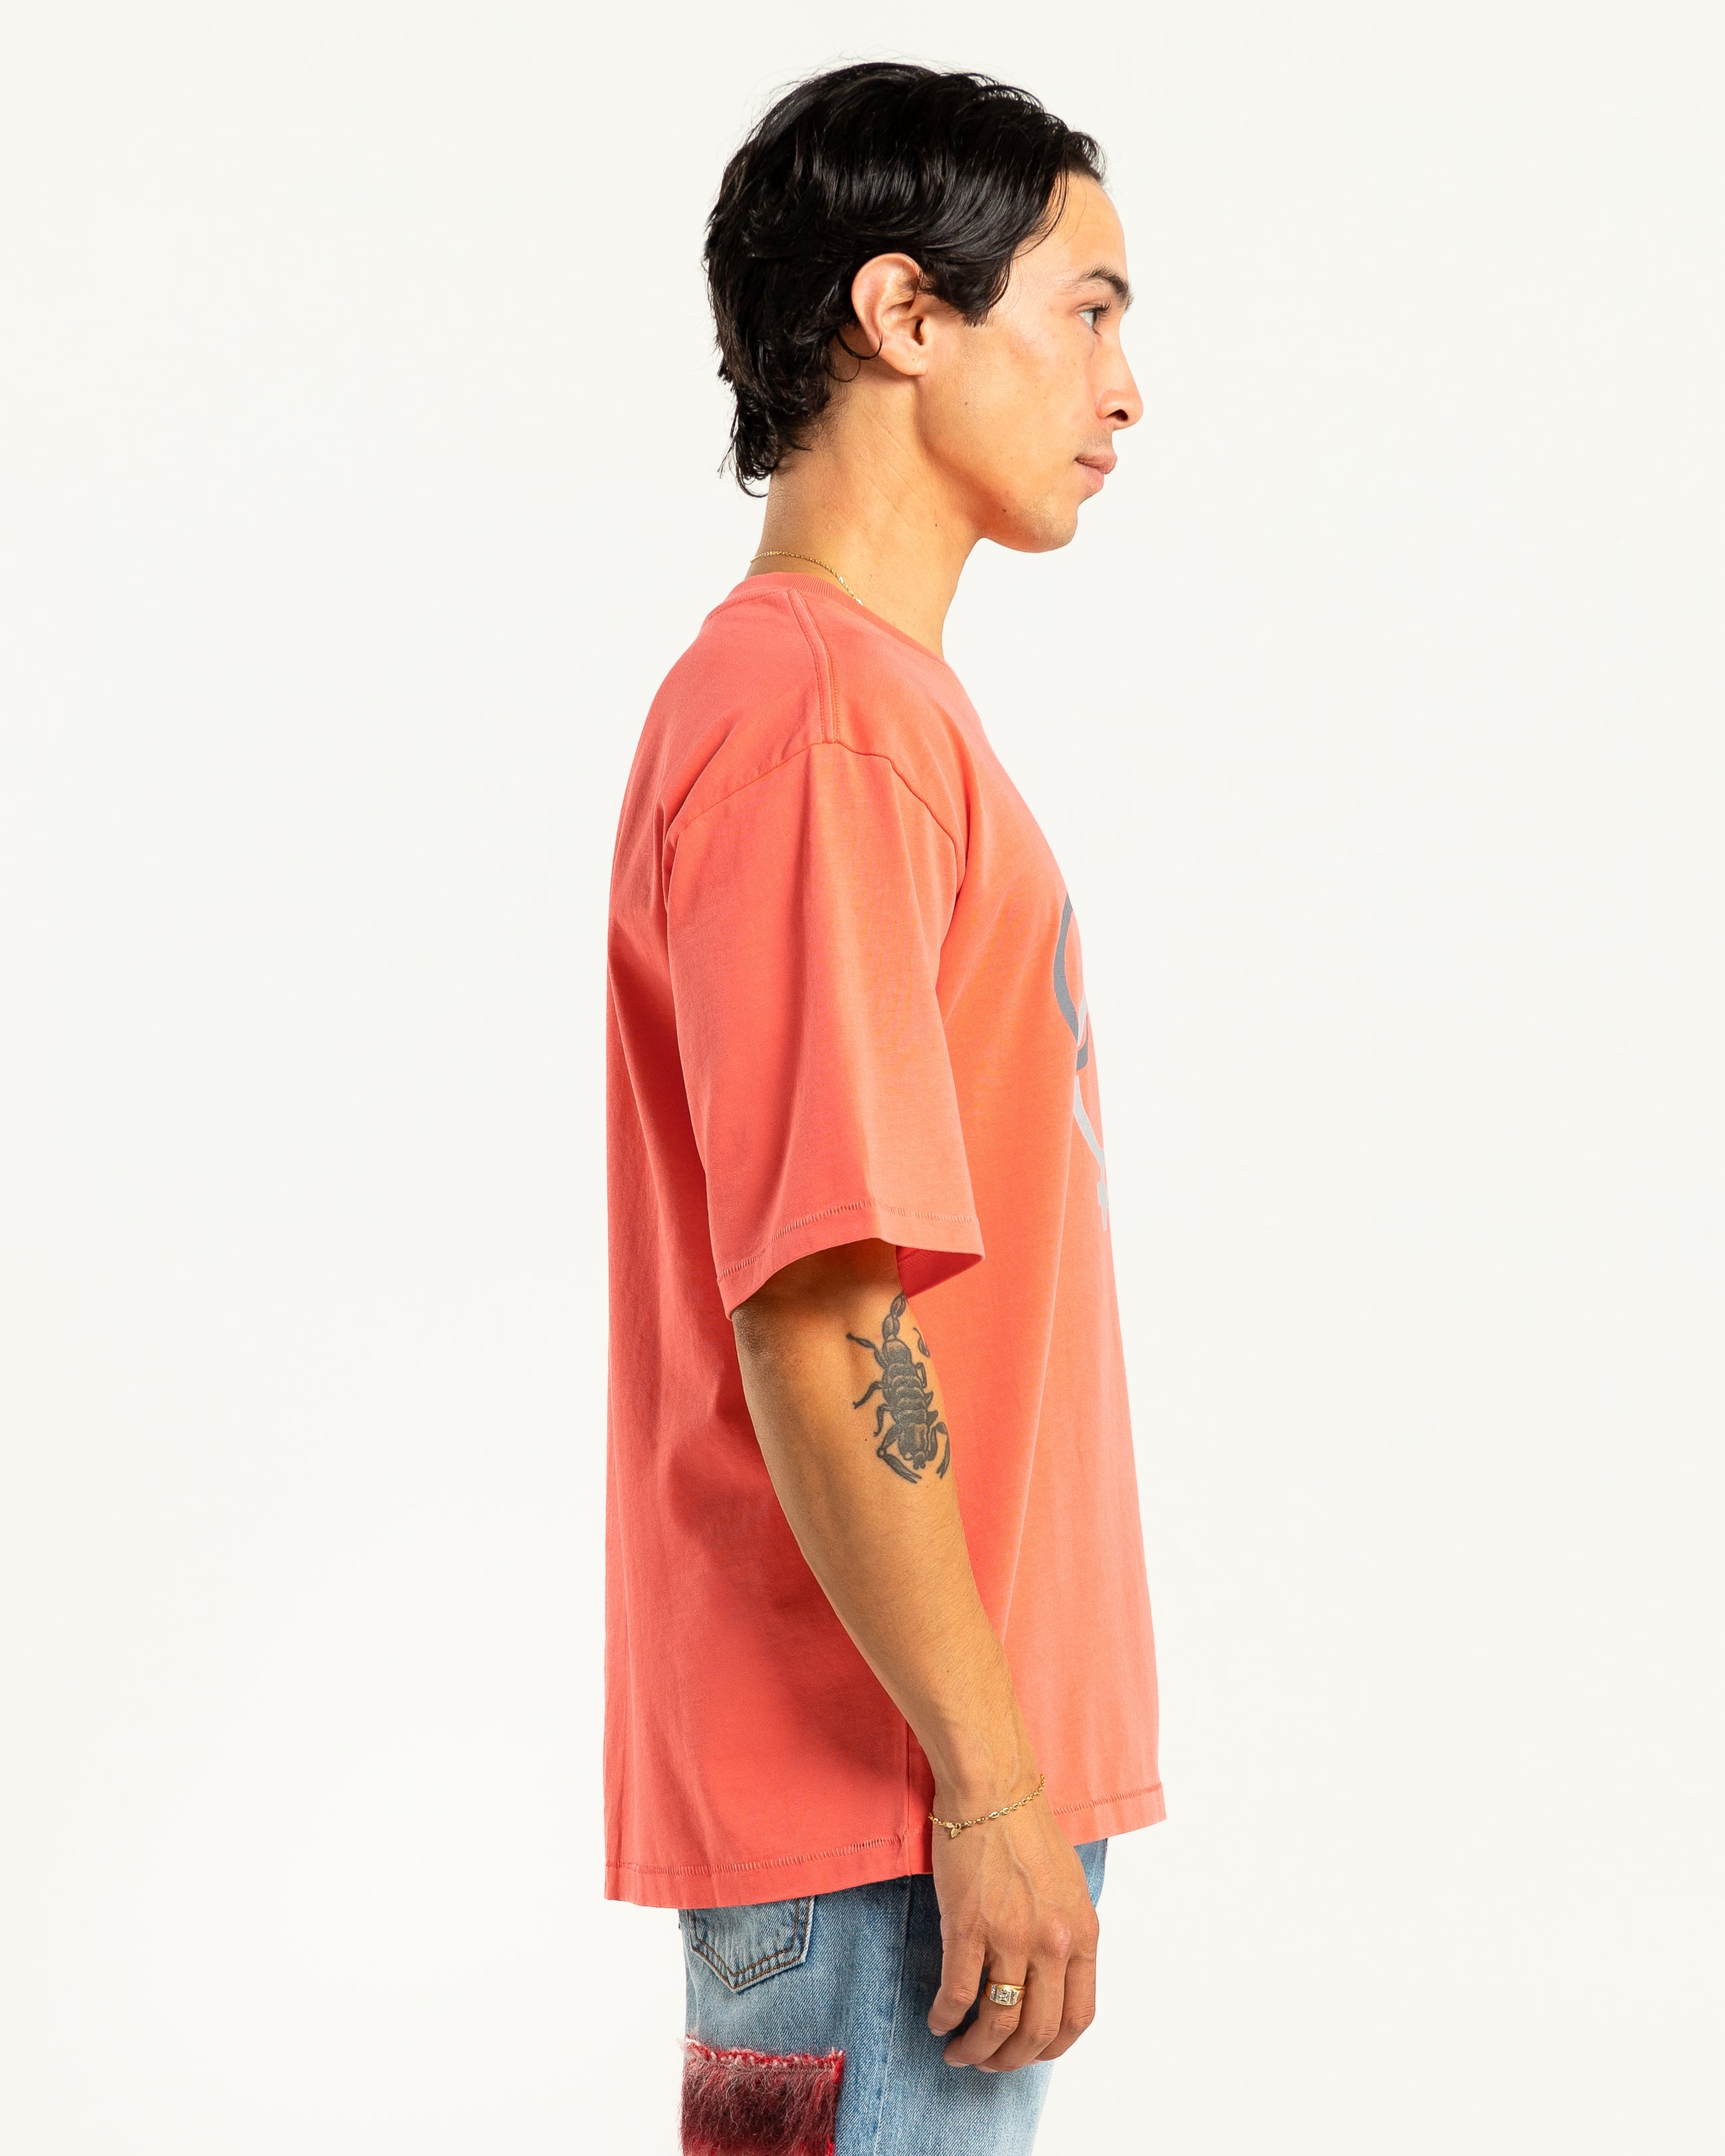 Olympic Sex T-Shirt in Orange